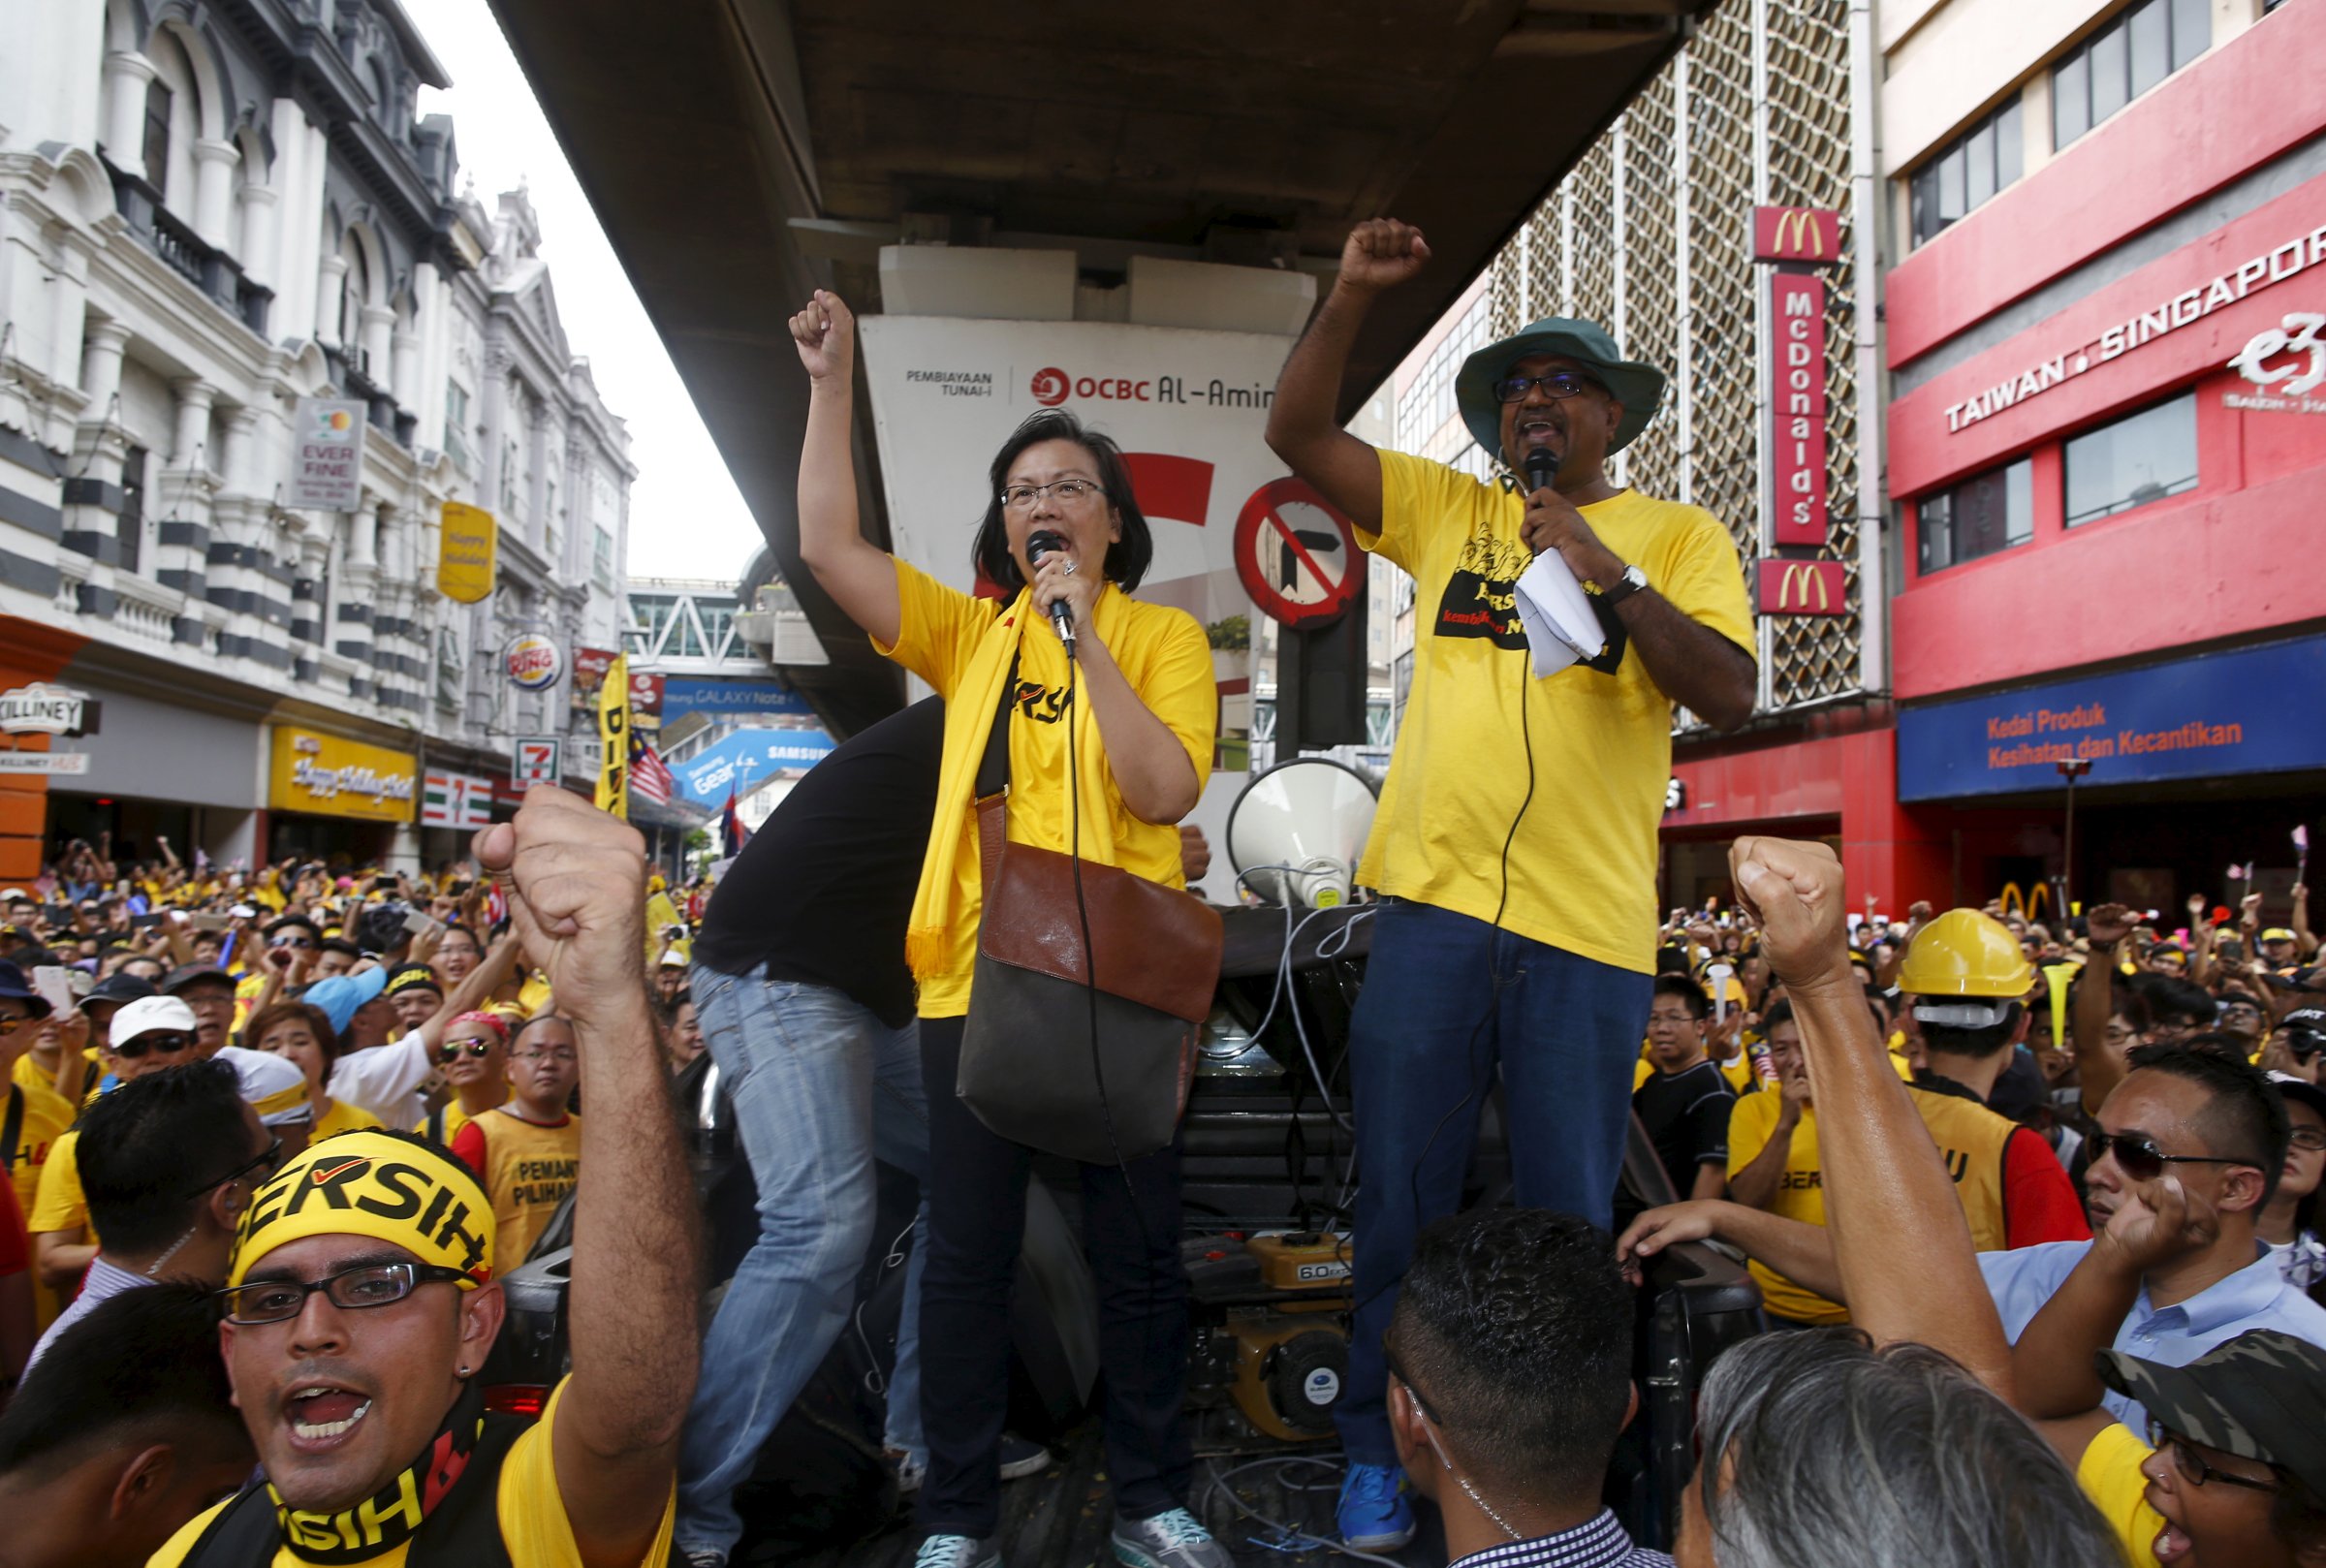 Pro-democracy group "Bersih" (Clean) chairwoman Maria Chin Abdullah rallies supporters as they prepare to march towards Dataran Merdeka in Malaysia's capital city of Kuala Lumpur